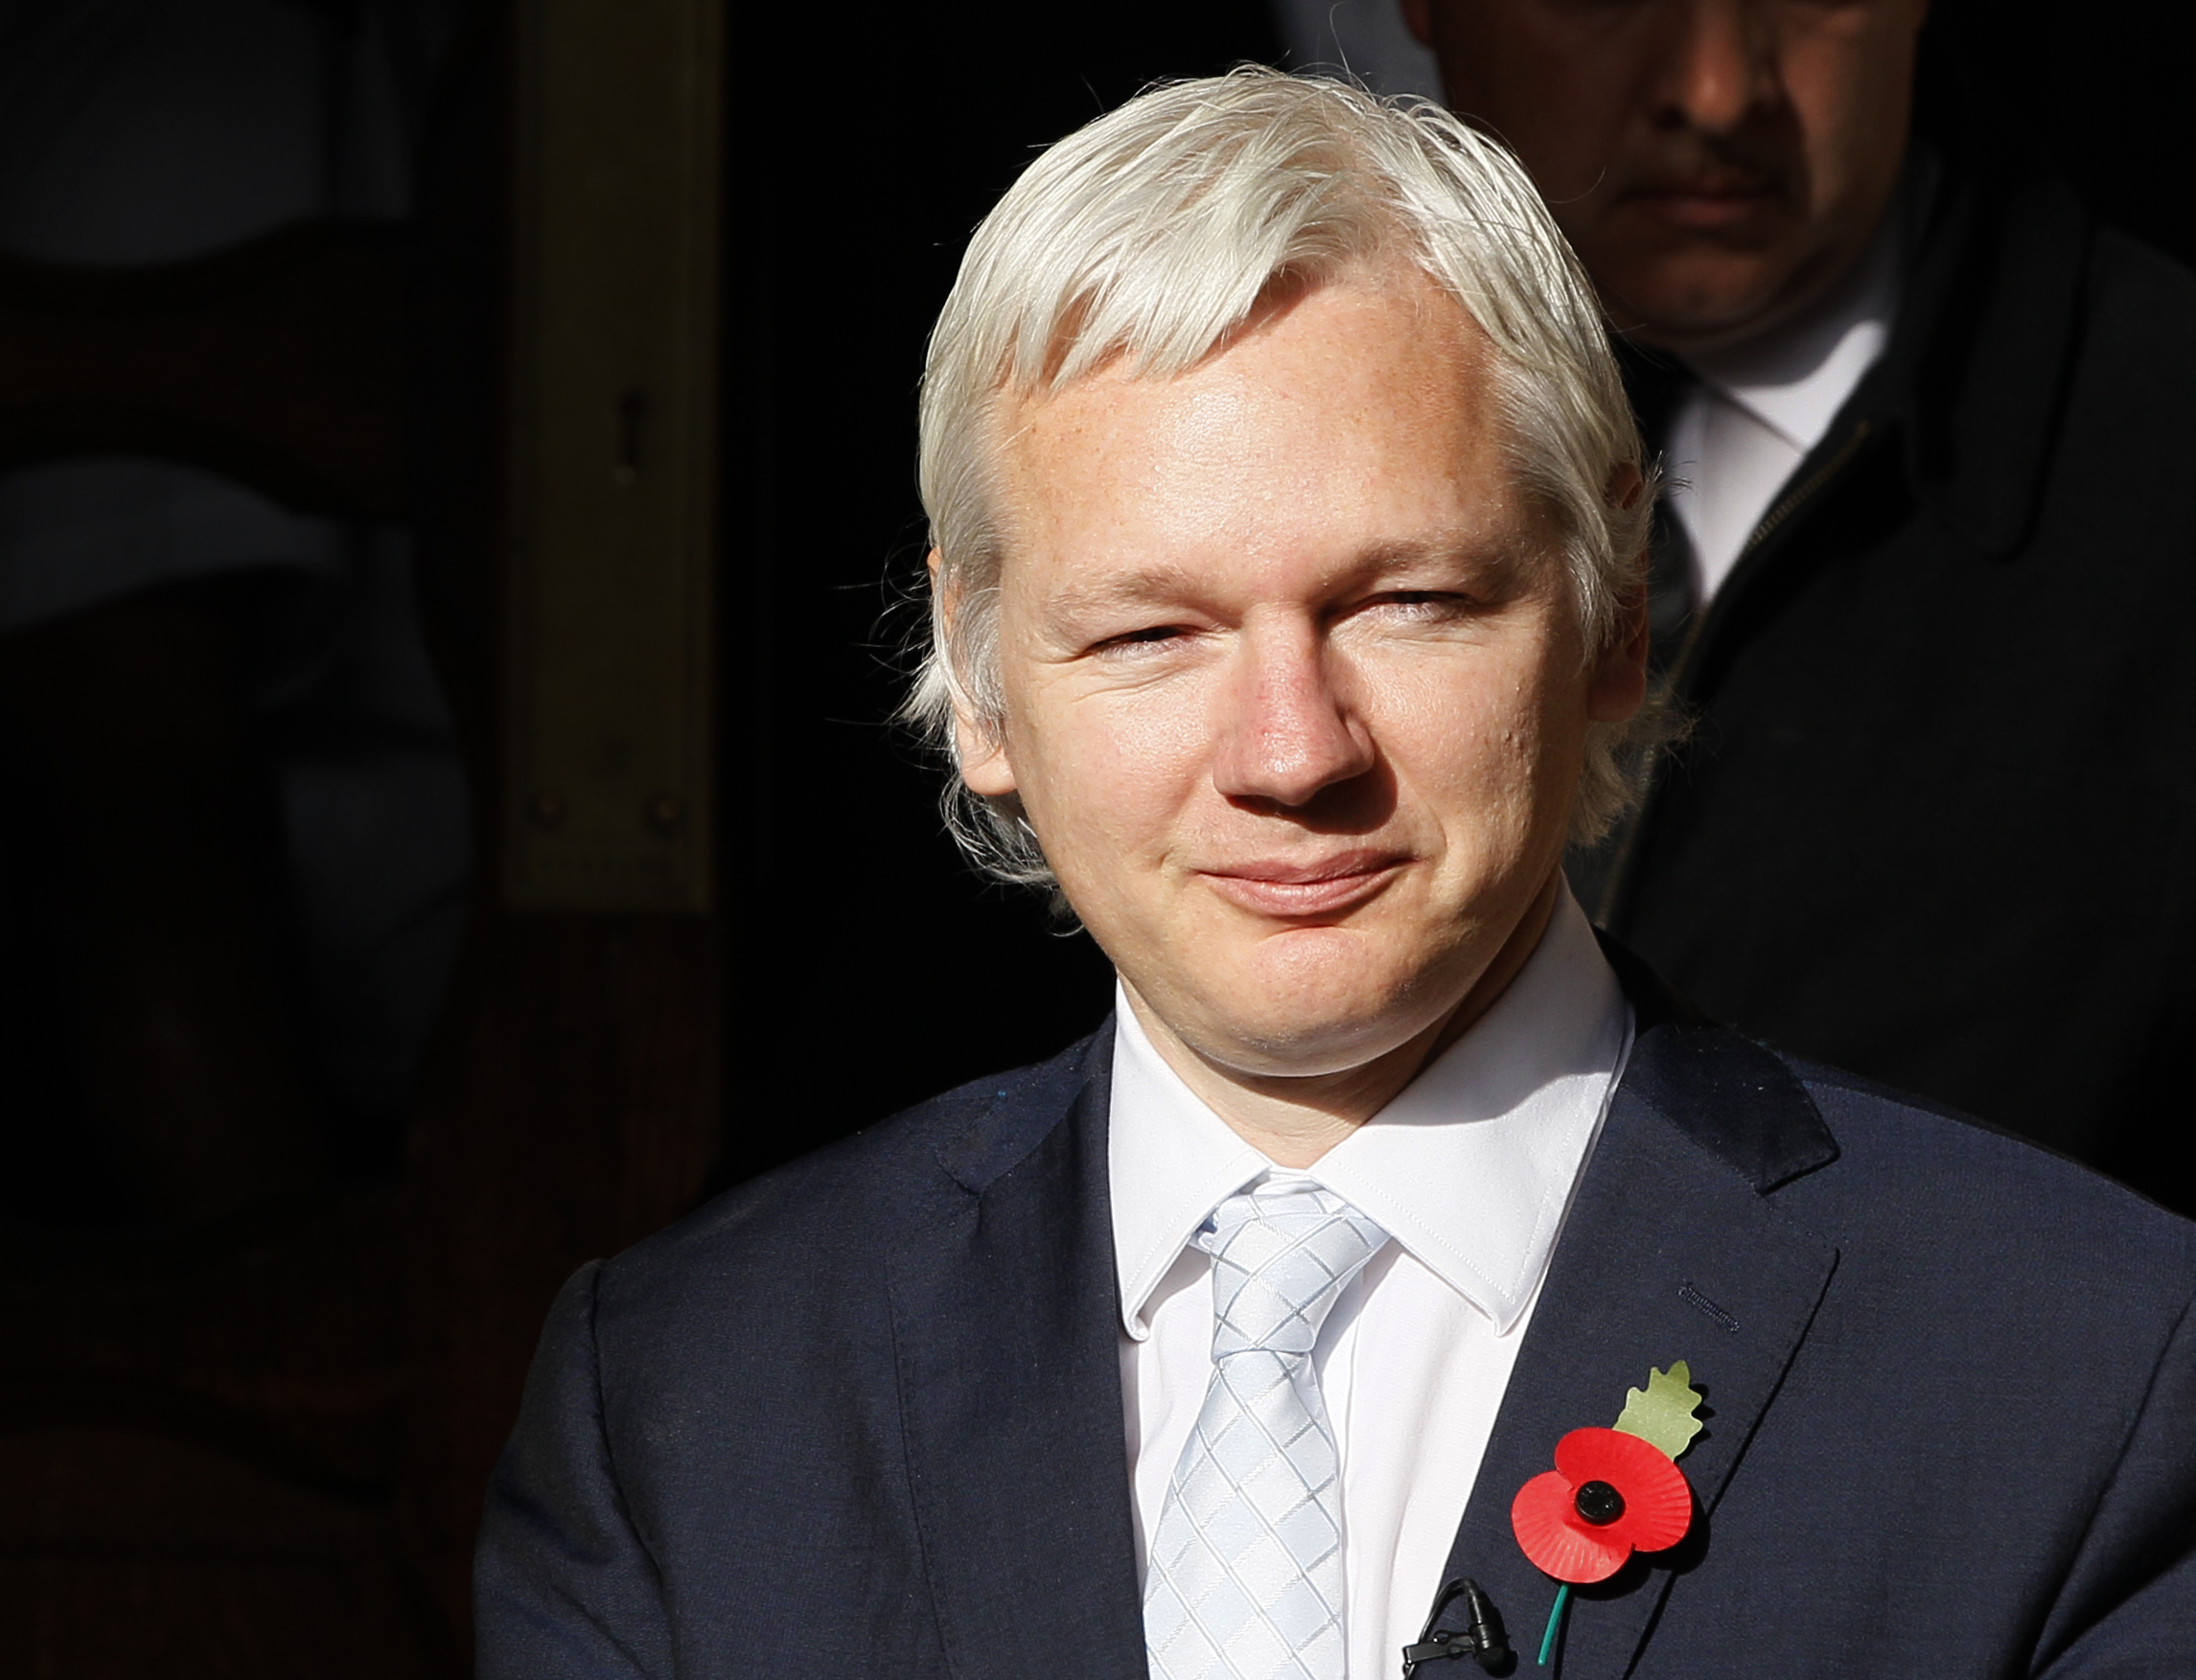 Wikileaks, Sverige, Politisk asyl, Ambassadör, Beatrice Ask, Julian Assange, Möte, Utlämning, Ecuador, Justitiedepartementet